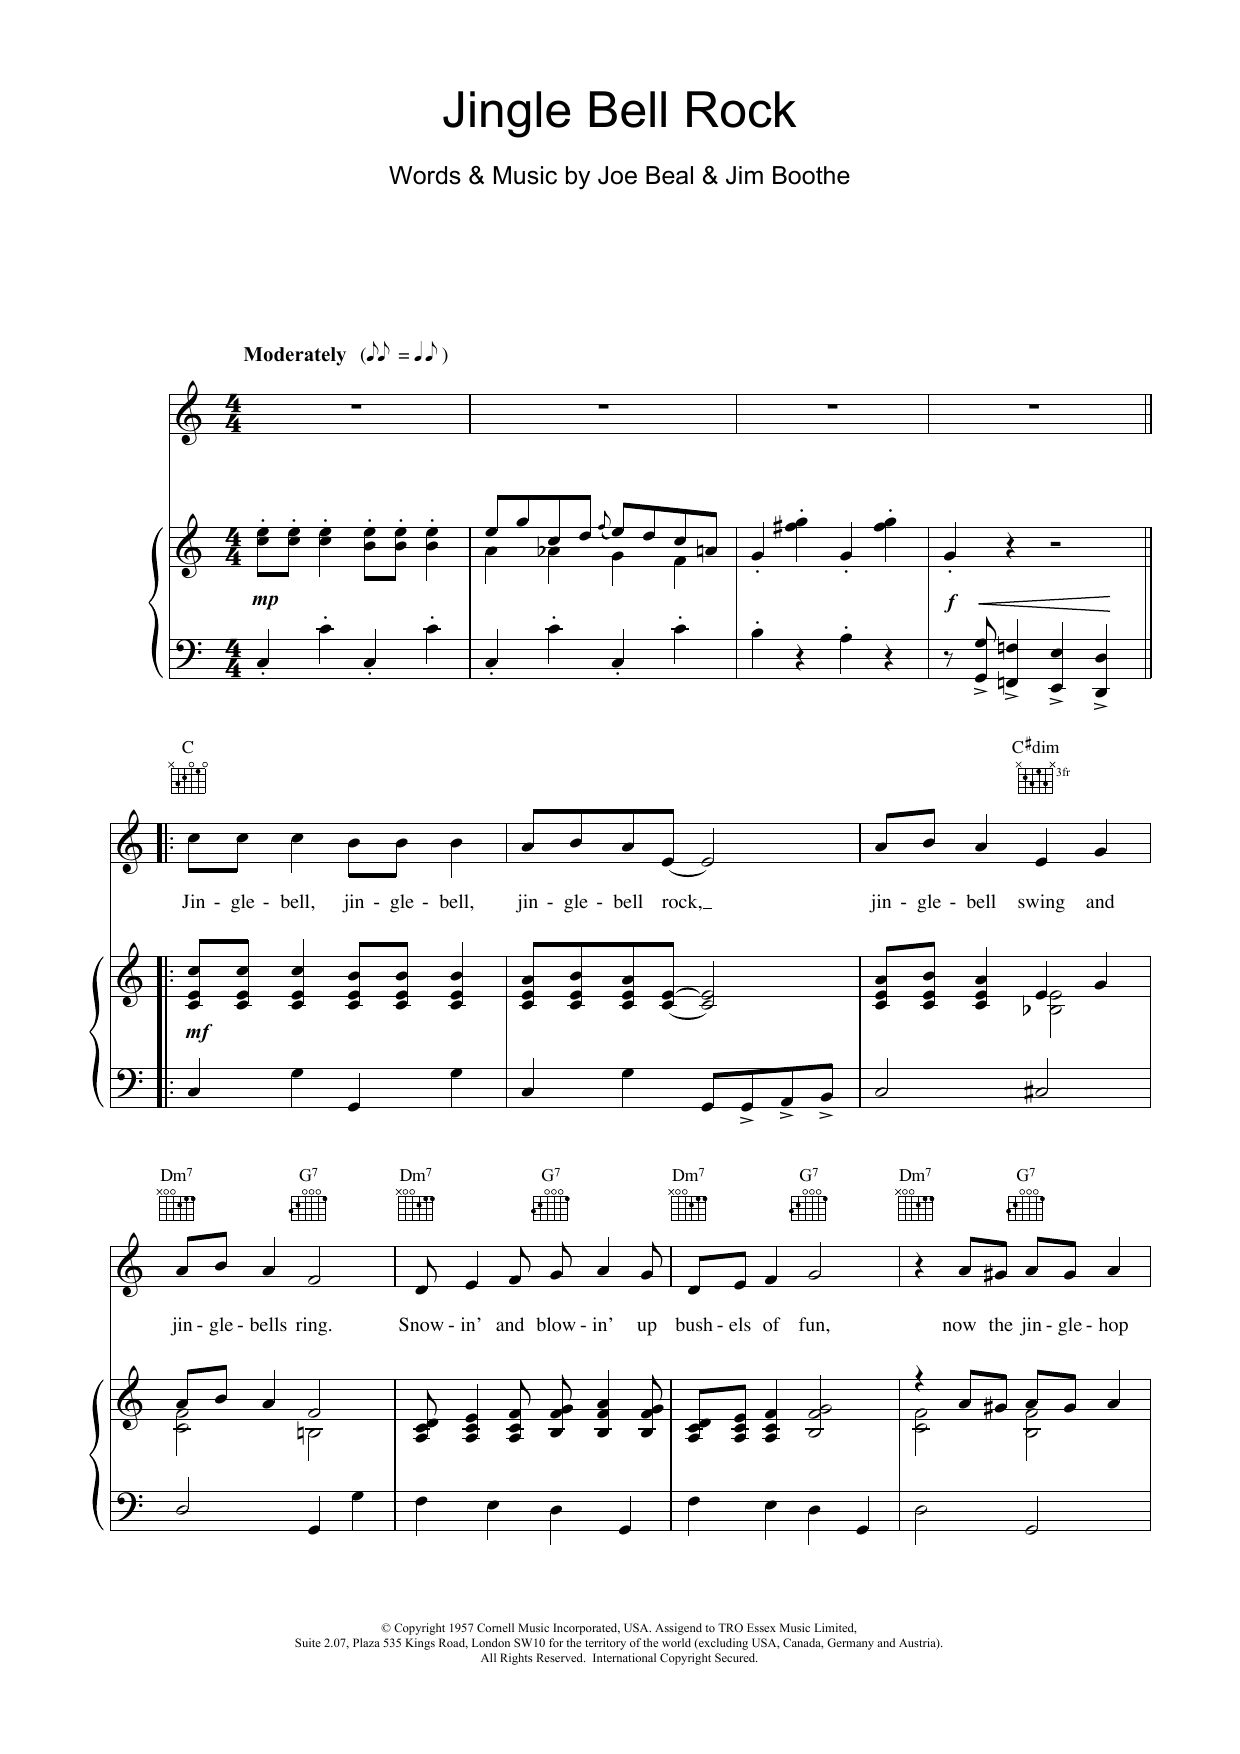 Bobby Helms Jingle Bell Rock Sheet Music Notes & Chords for Ukulele - Download or Print PDF